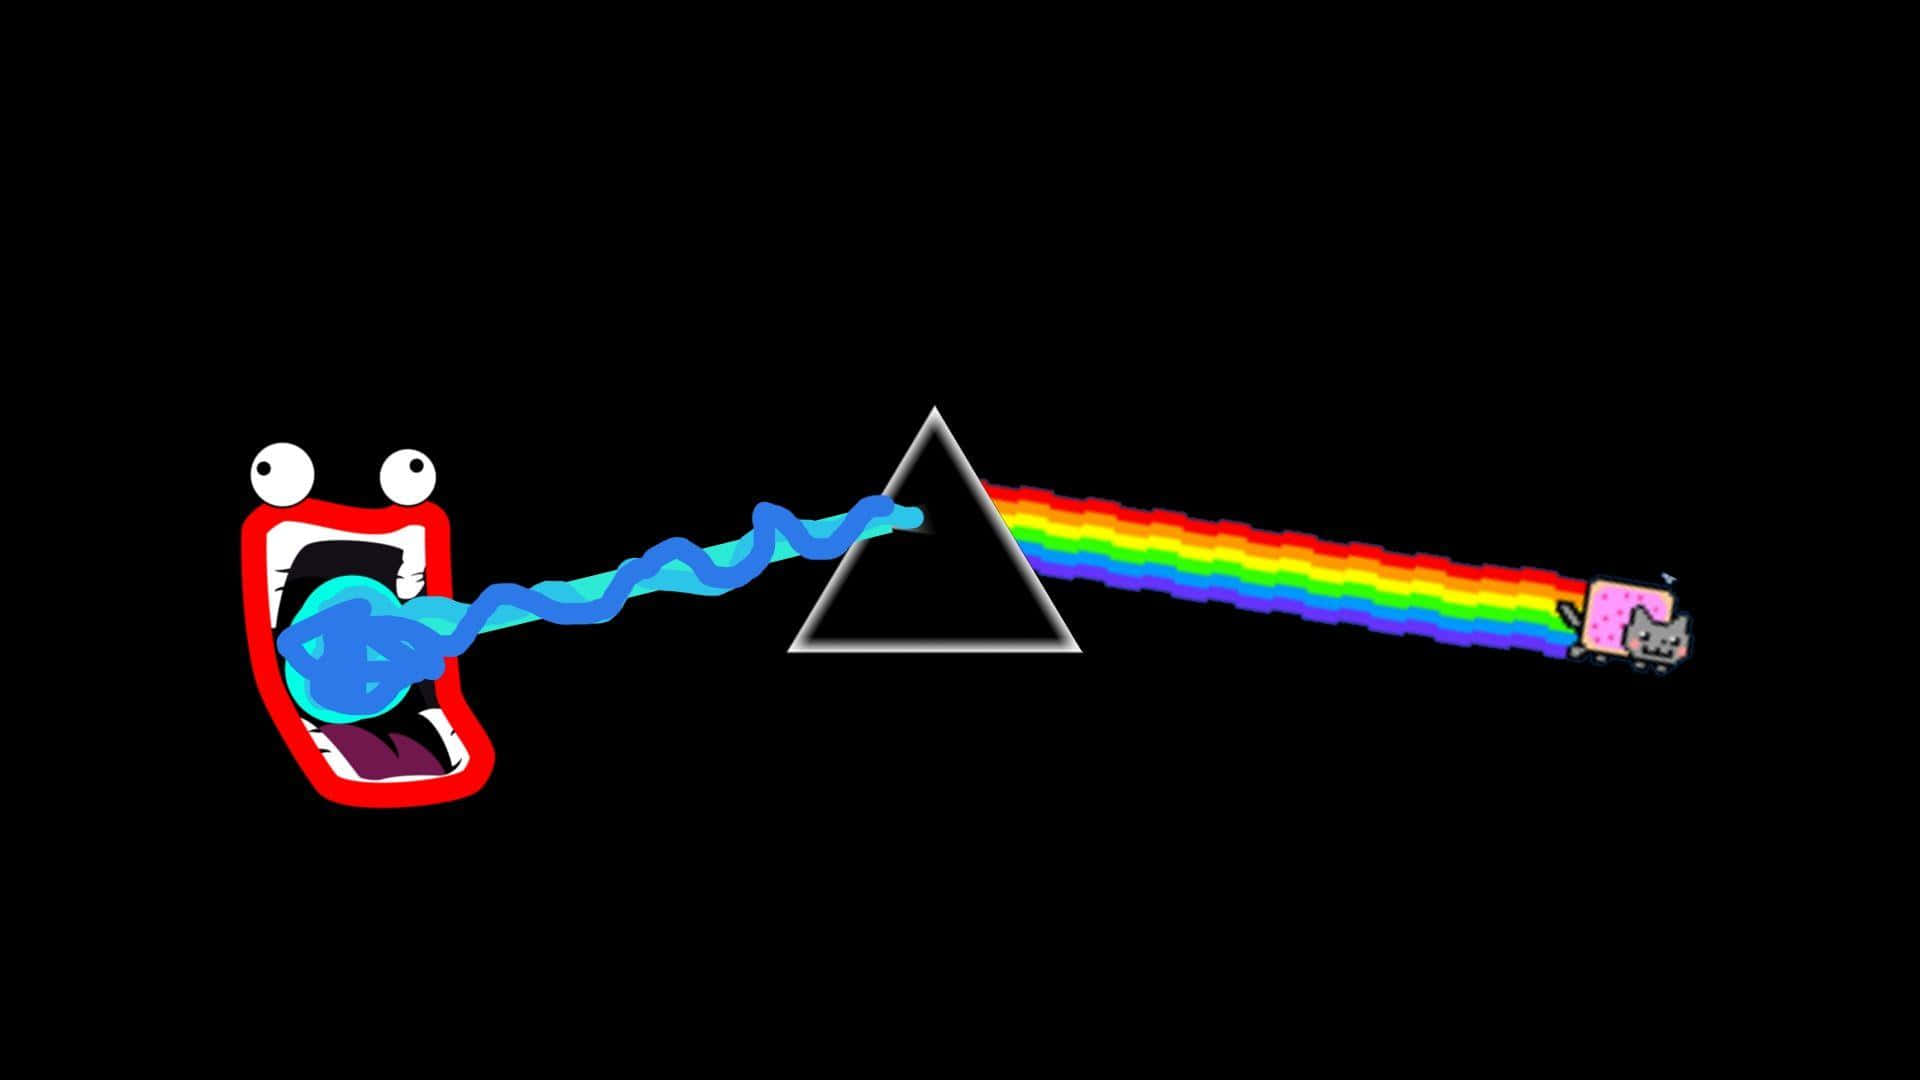 Nyan Cat Flying through a Pixelated World